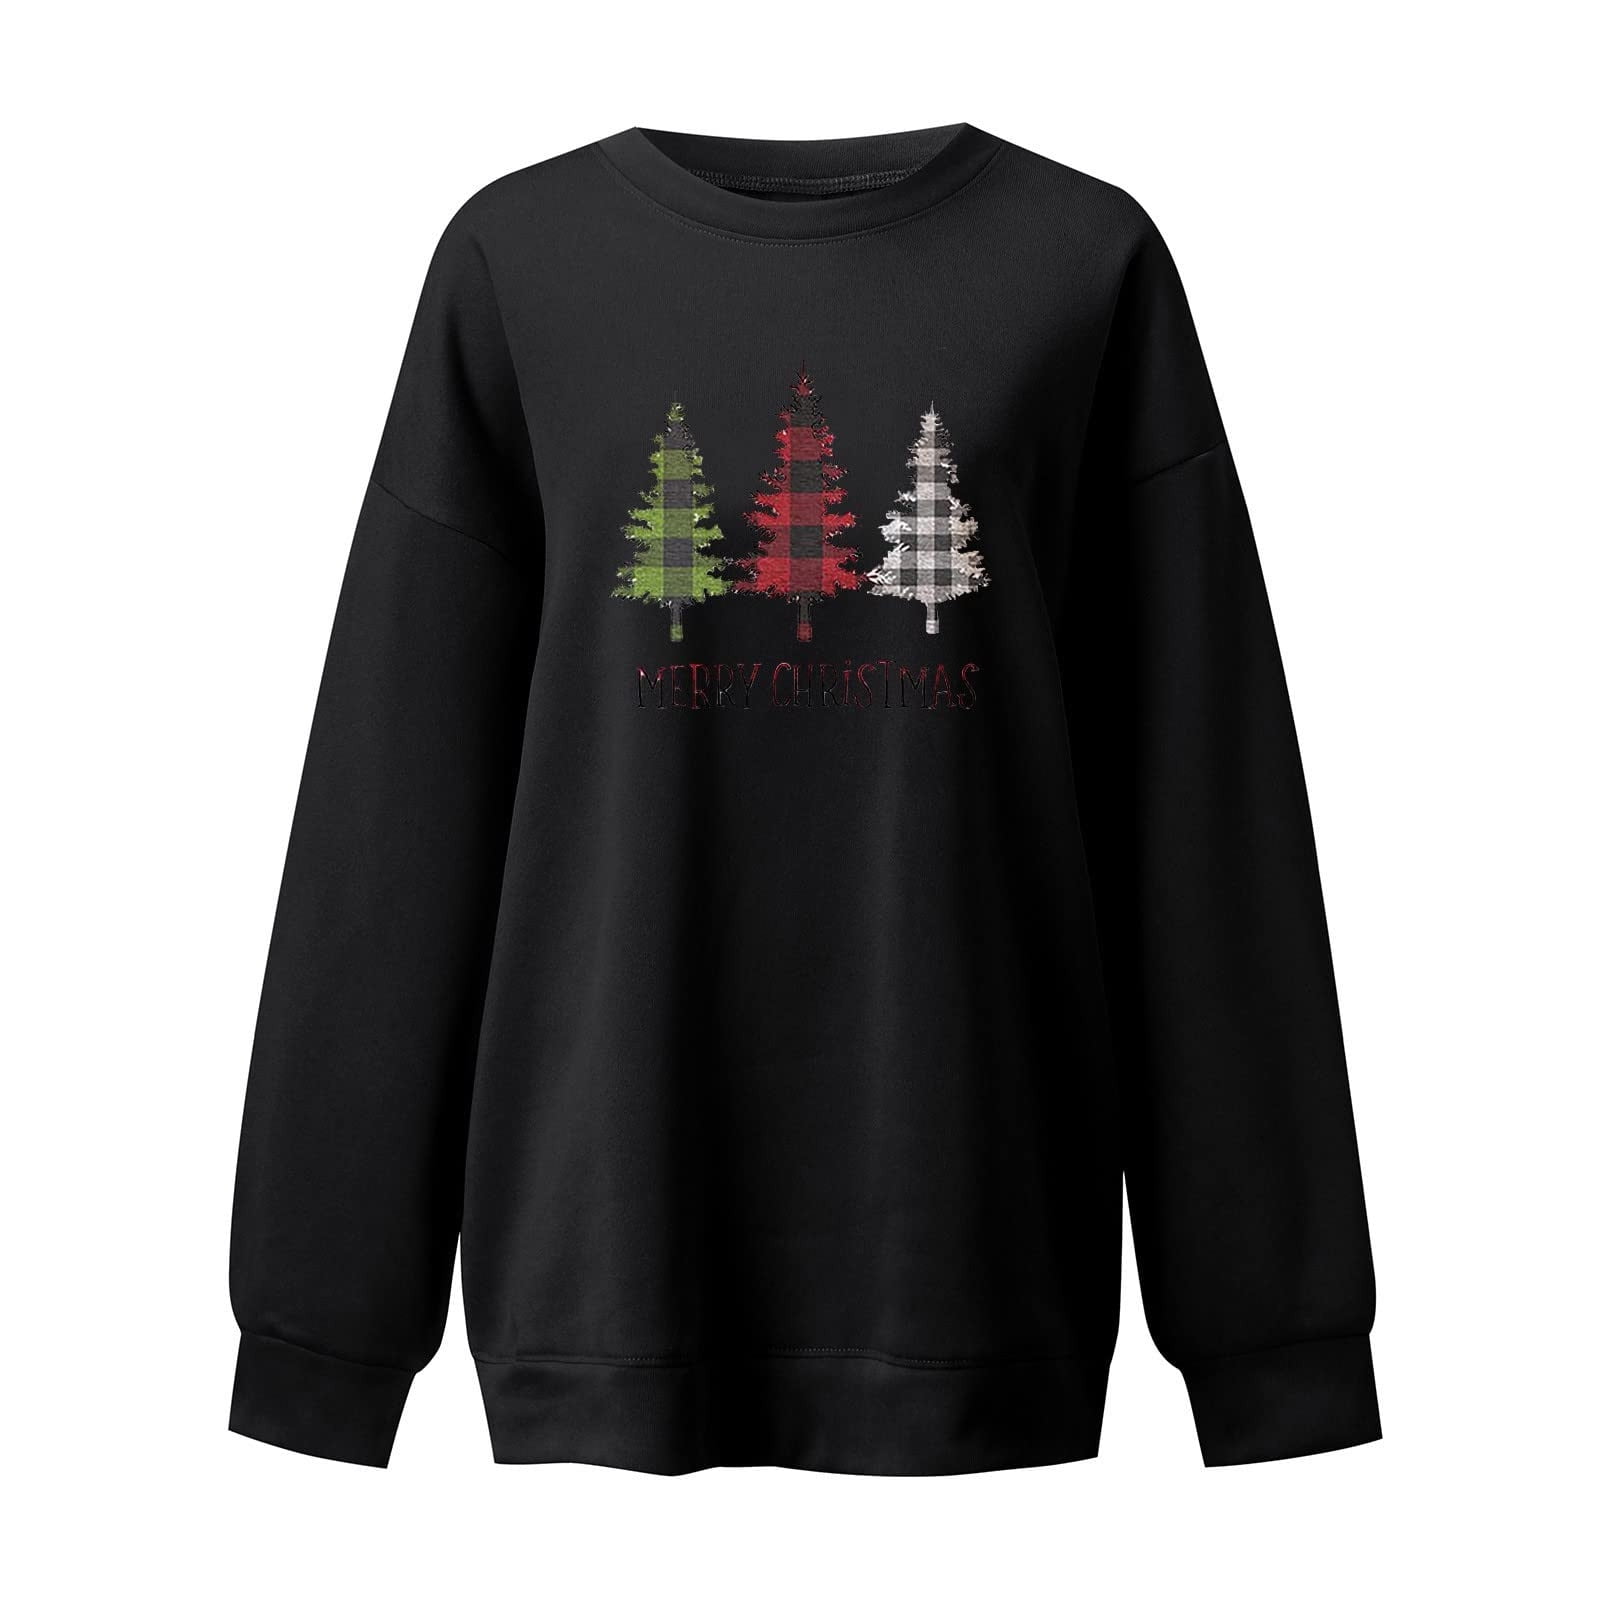 CHUOAND Christmas Sweatshirts for Women Christmas Tree Graphic Pullover  Sweatshirt Cute Crewneck Christmas Gnome Shirts Tops